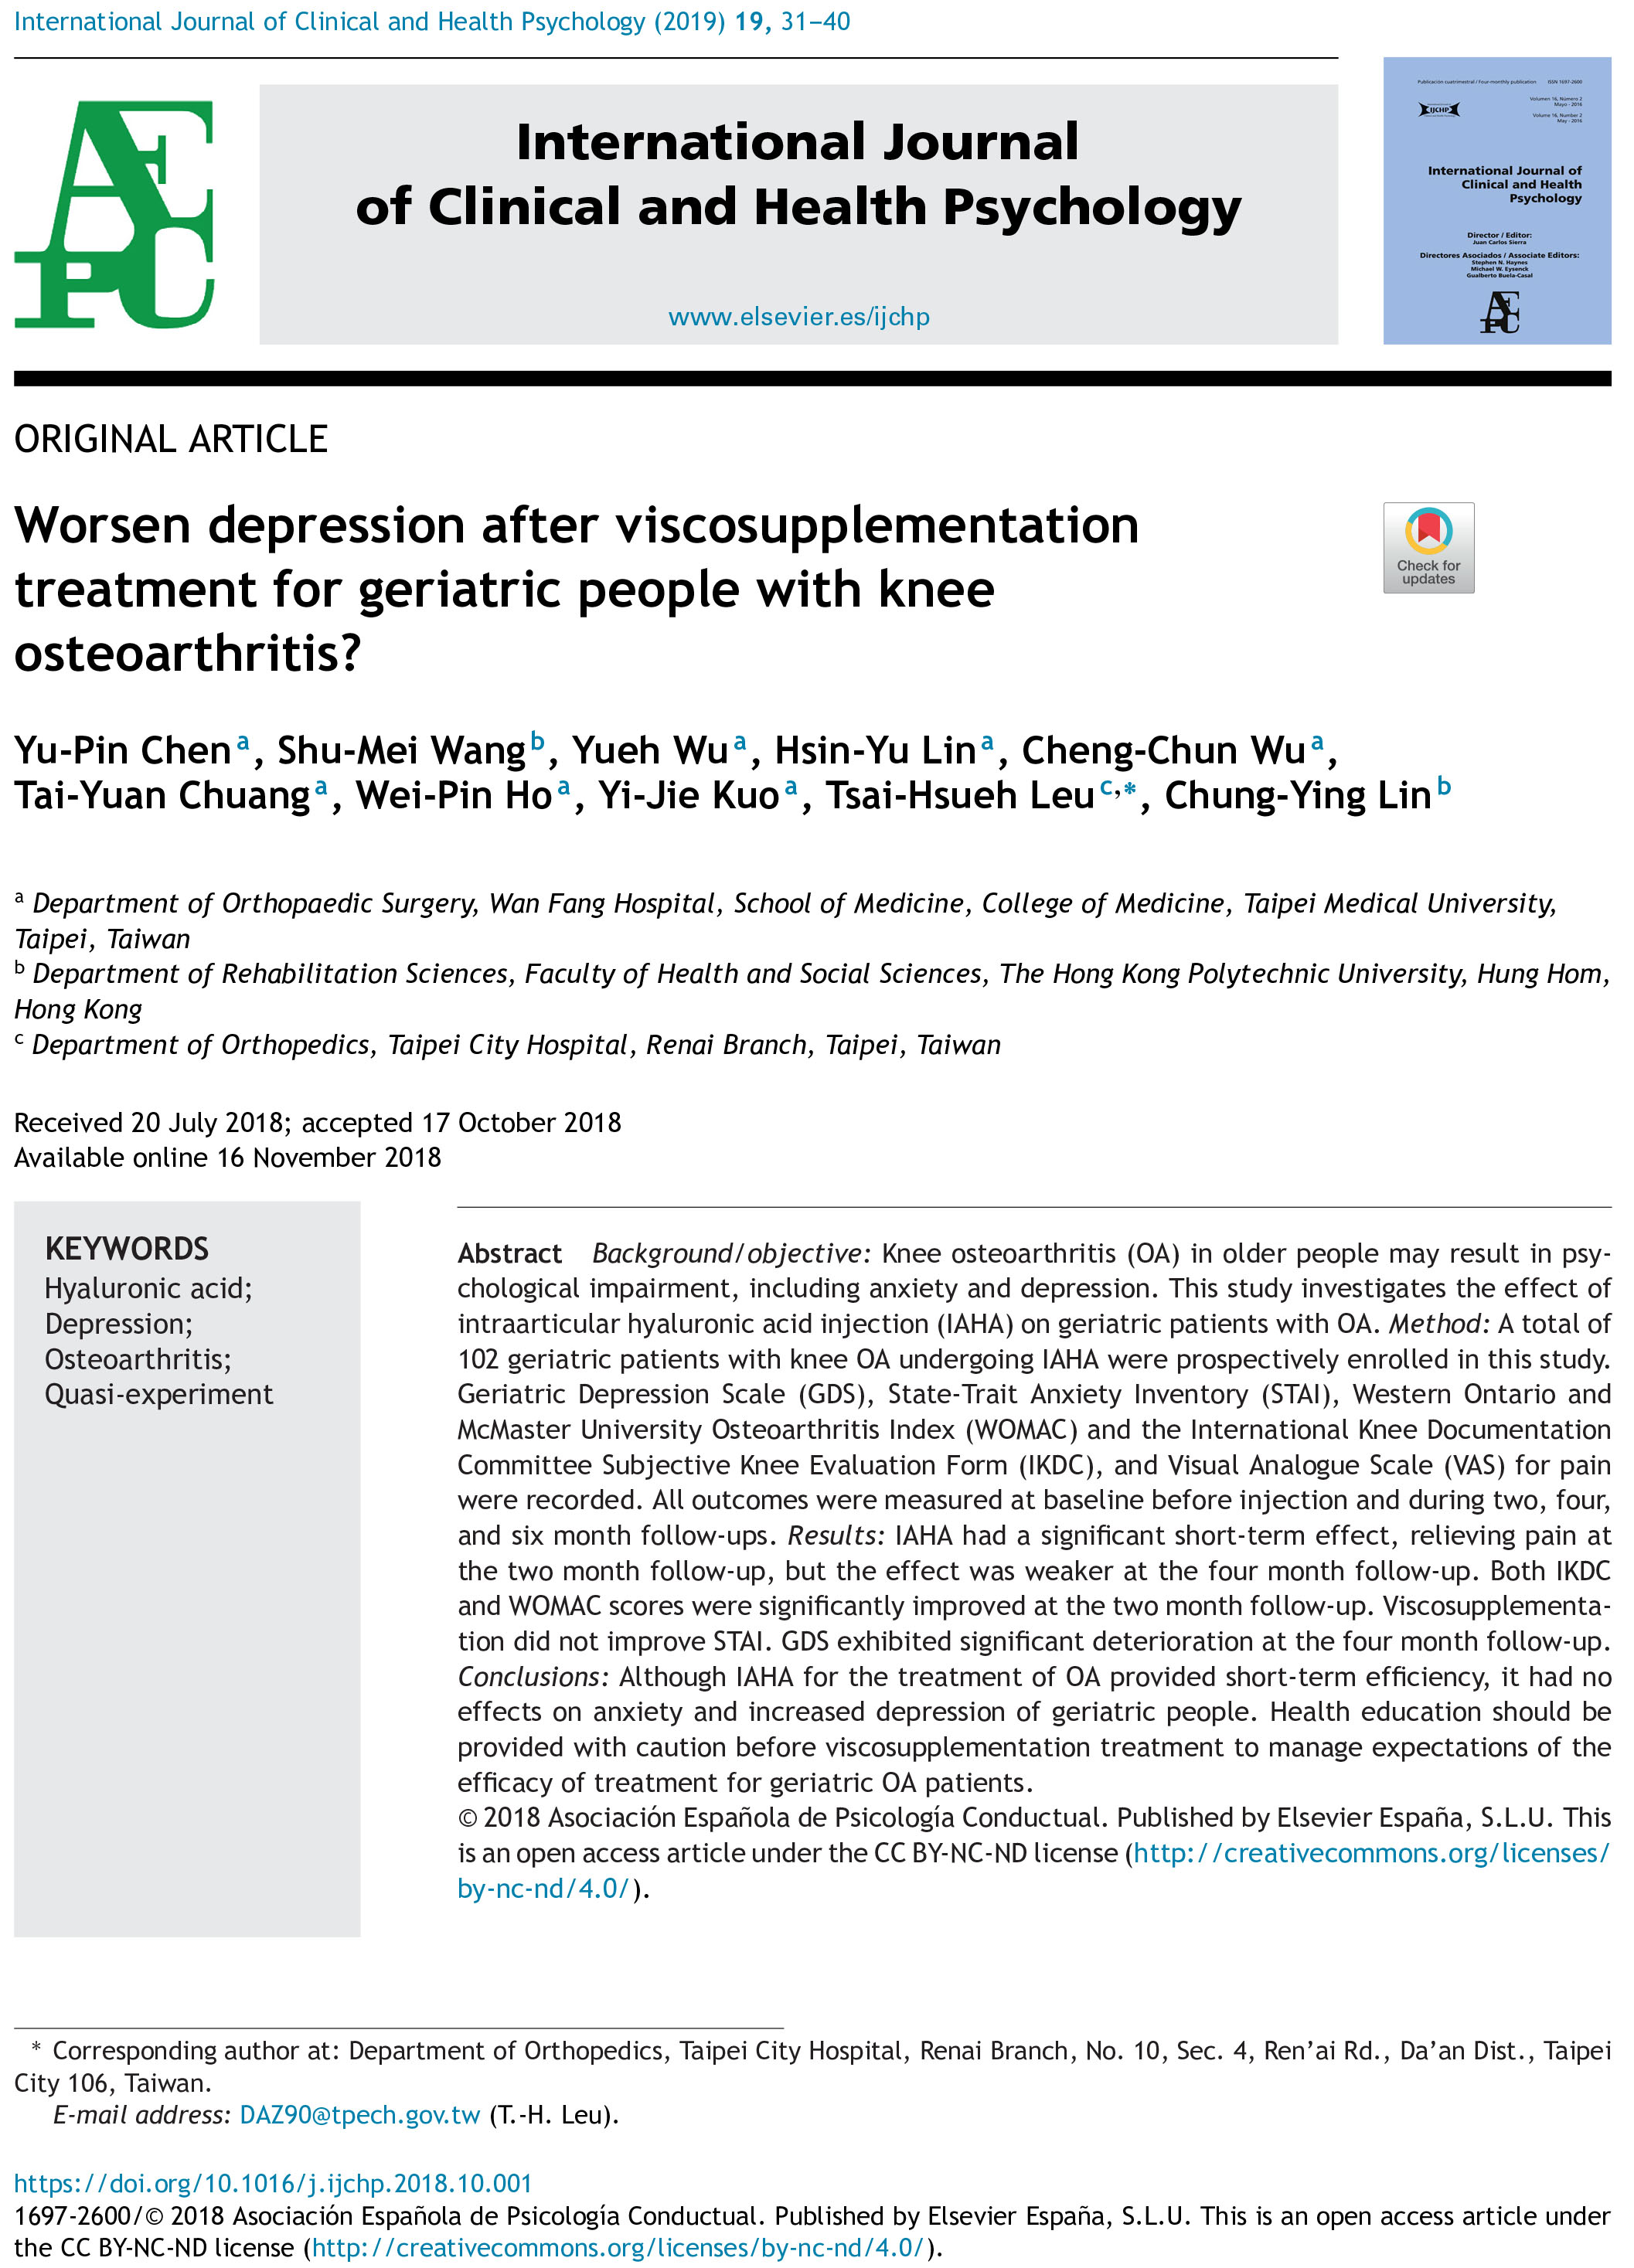 Worsen-depression-after-viscosupplementation-treatment-for-geriatic-people-with-knee-osteoarthritis-1.jpg